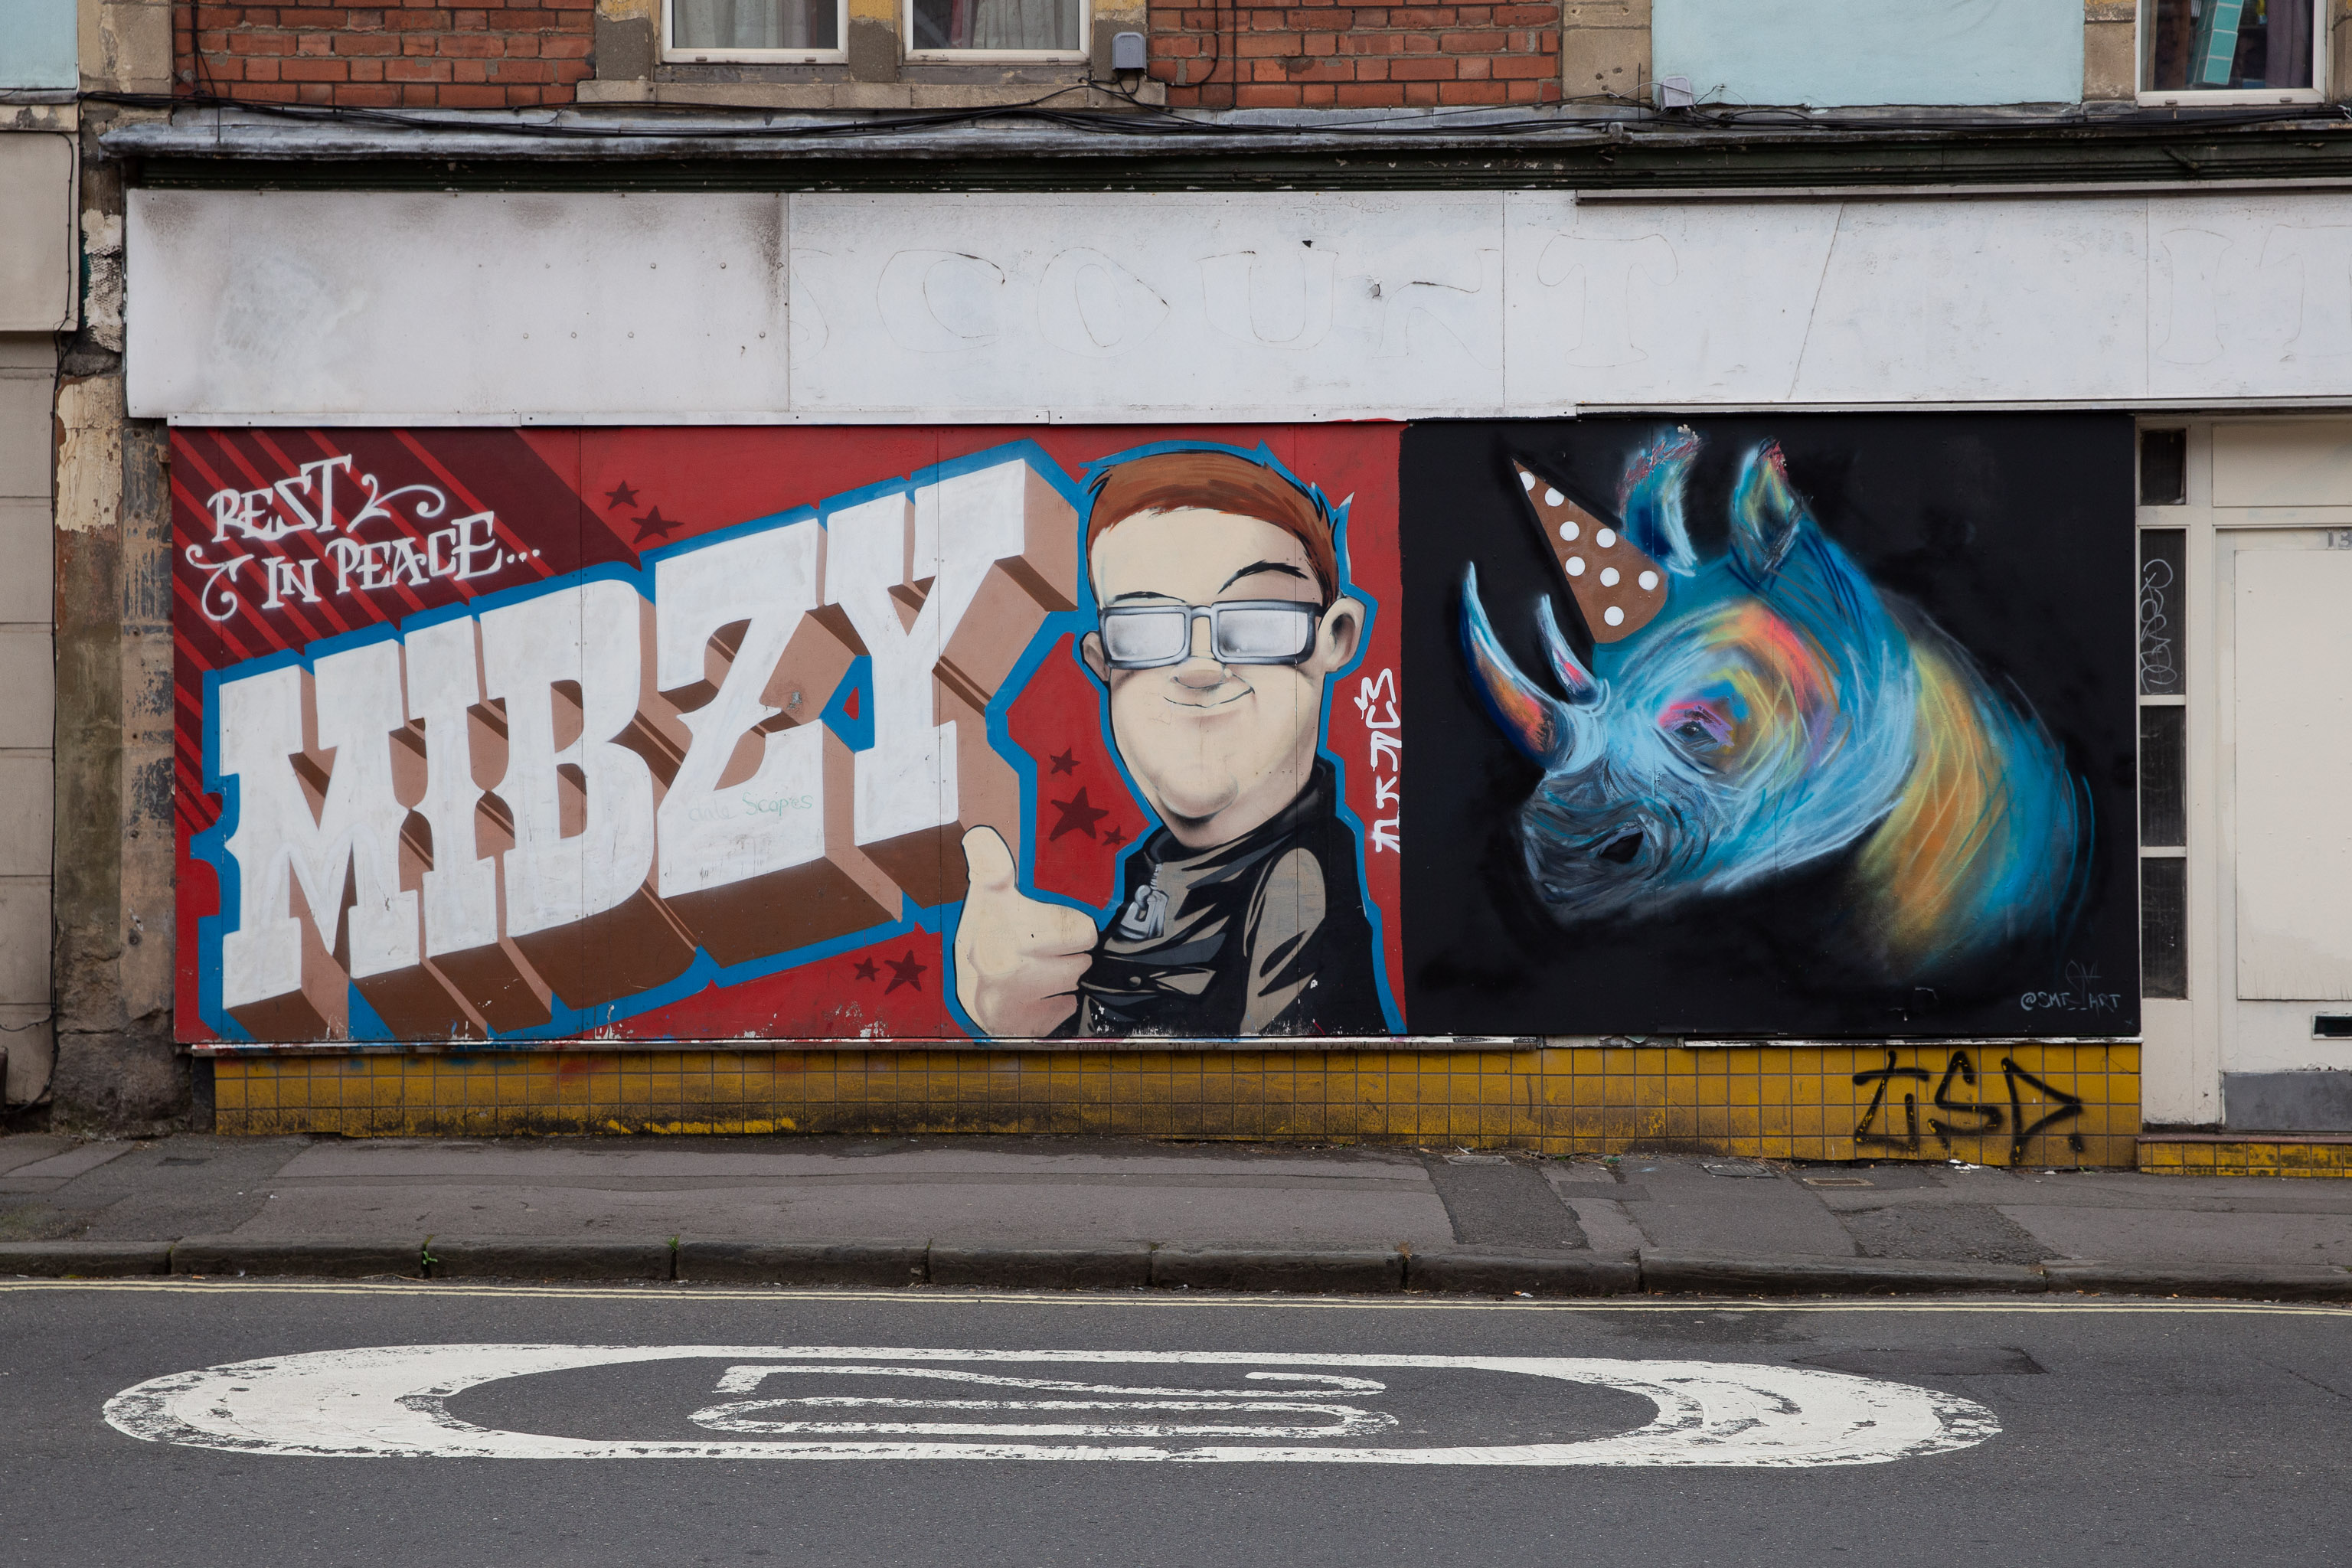 Mibzy
A long-standing bit of work on North Street, this is a tribute to [Matthew Hibbert(https://www.bishopstonvoice.co.uk/graffiti-mural-dedicated-to-mi...